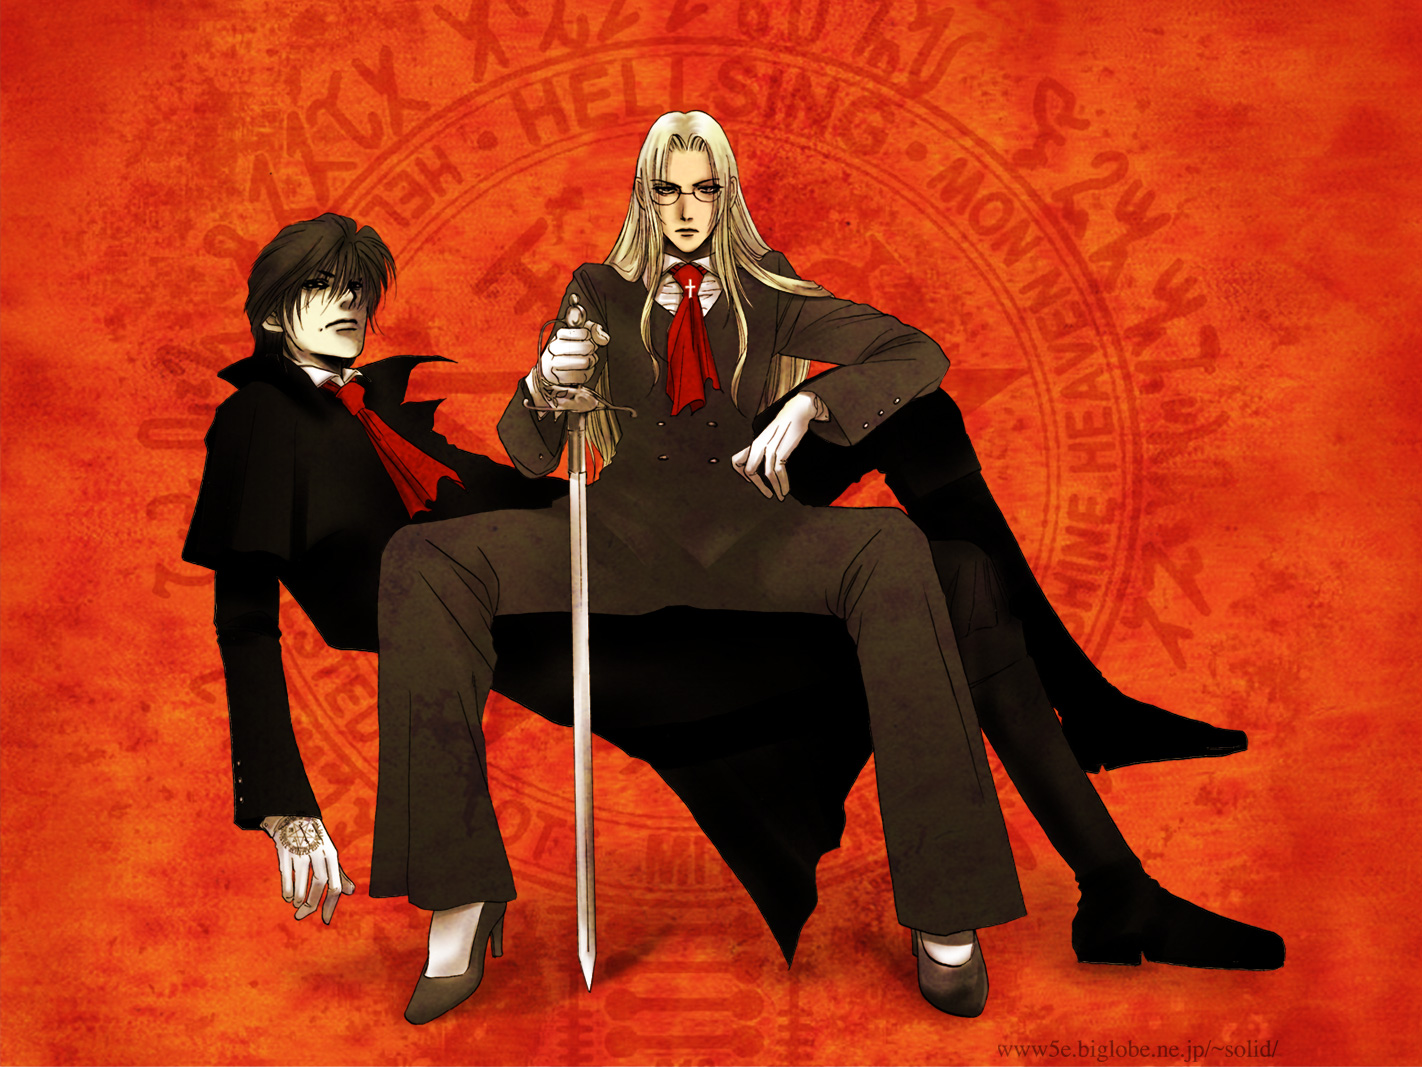 Alucard and Integra - Hellsing & Anime Background Wallpapers on Desktop  Nexus (Image 595952)